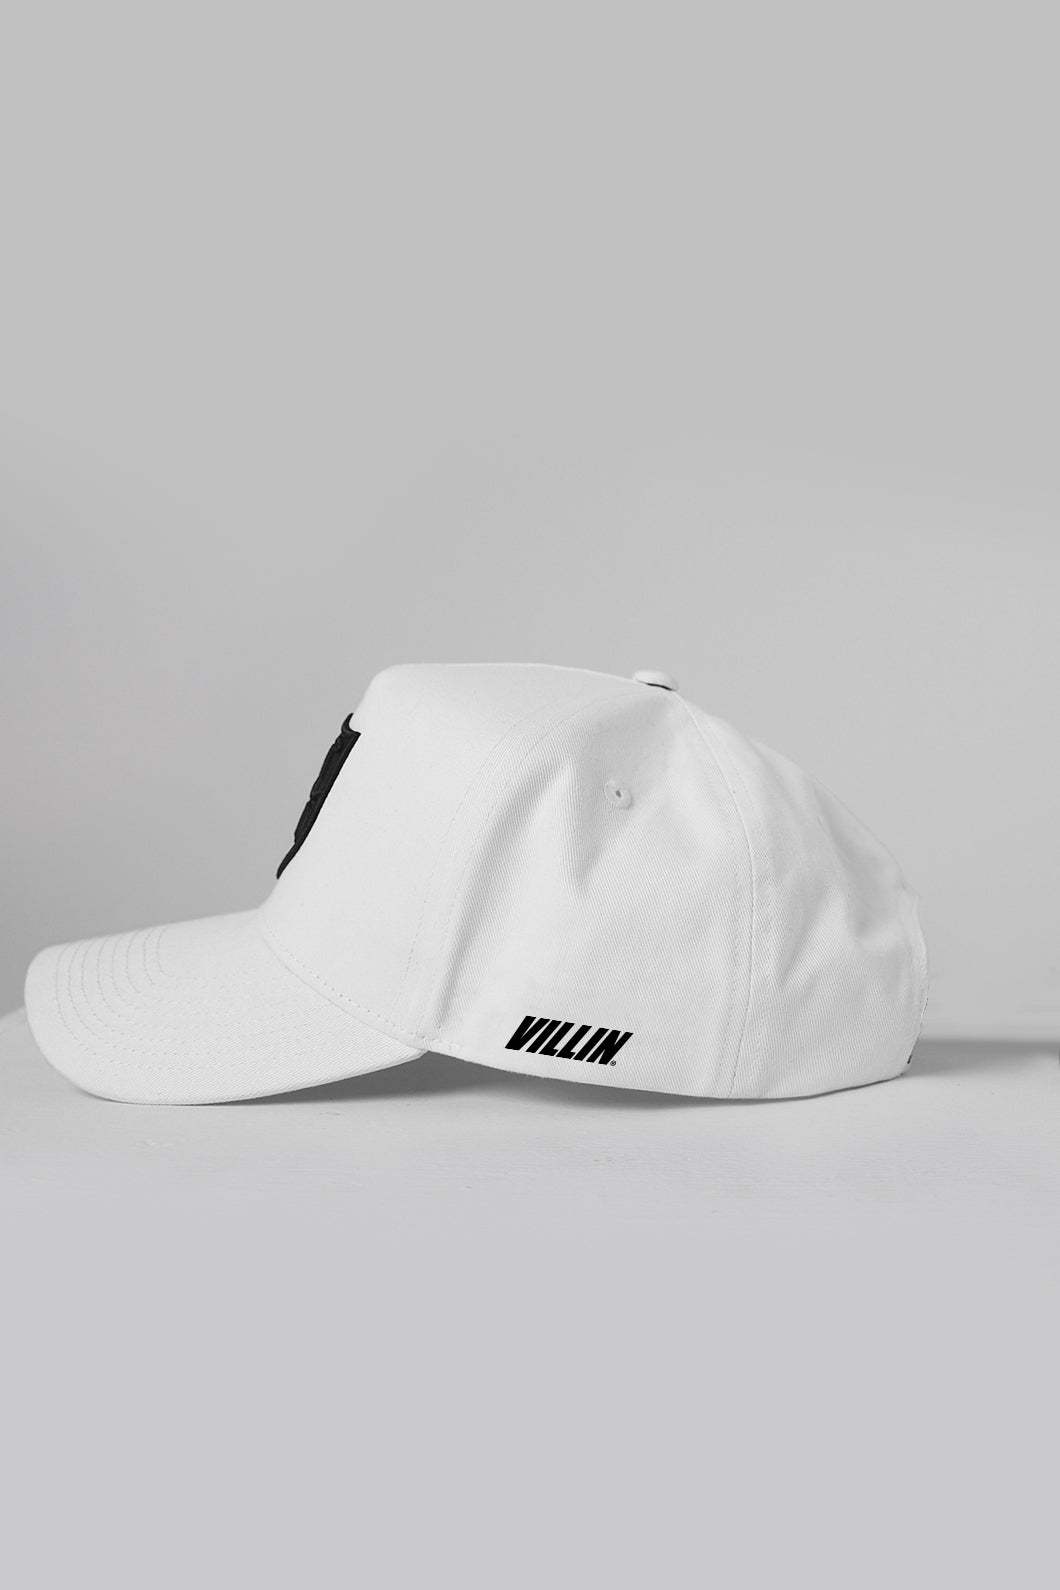 Villin White Hat